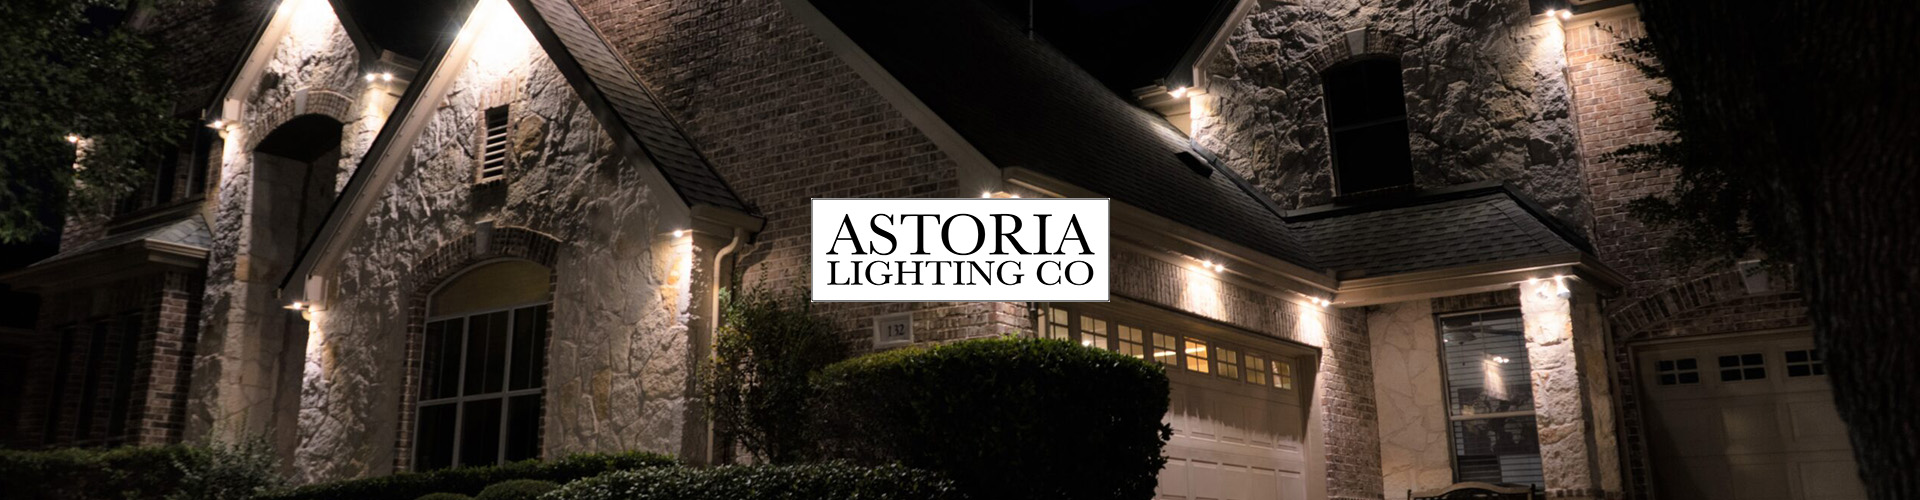 Astoria Lighting banner